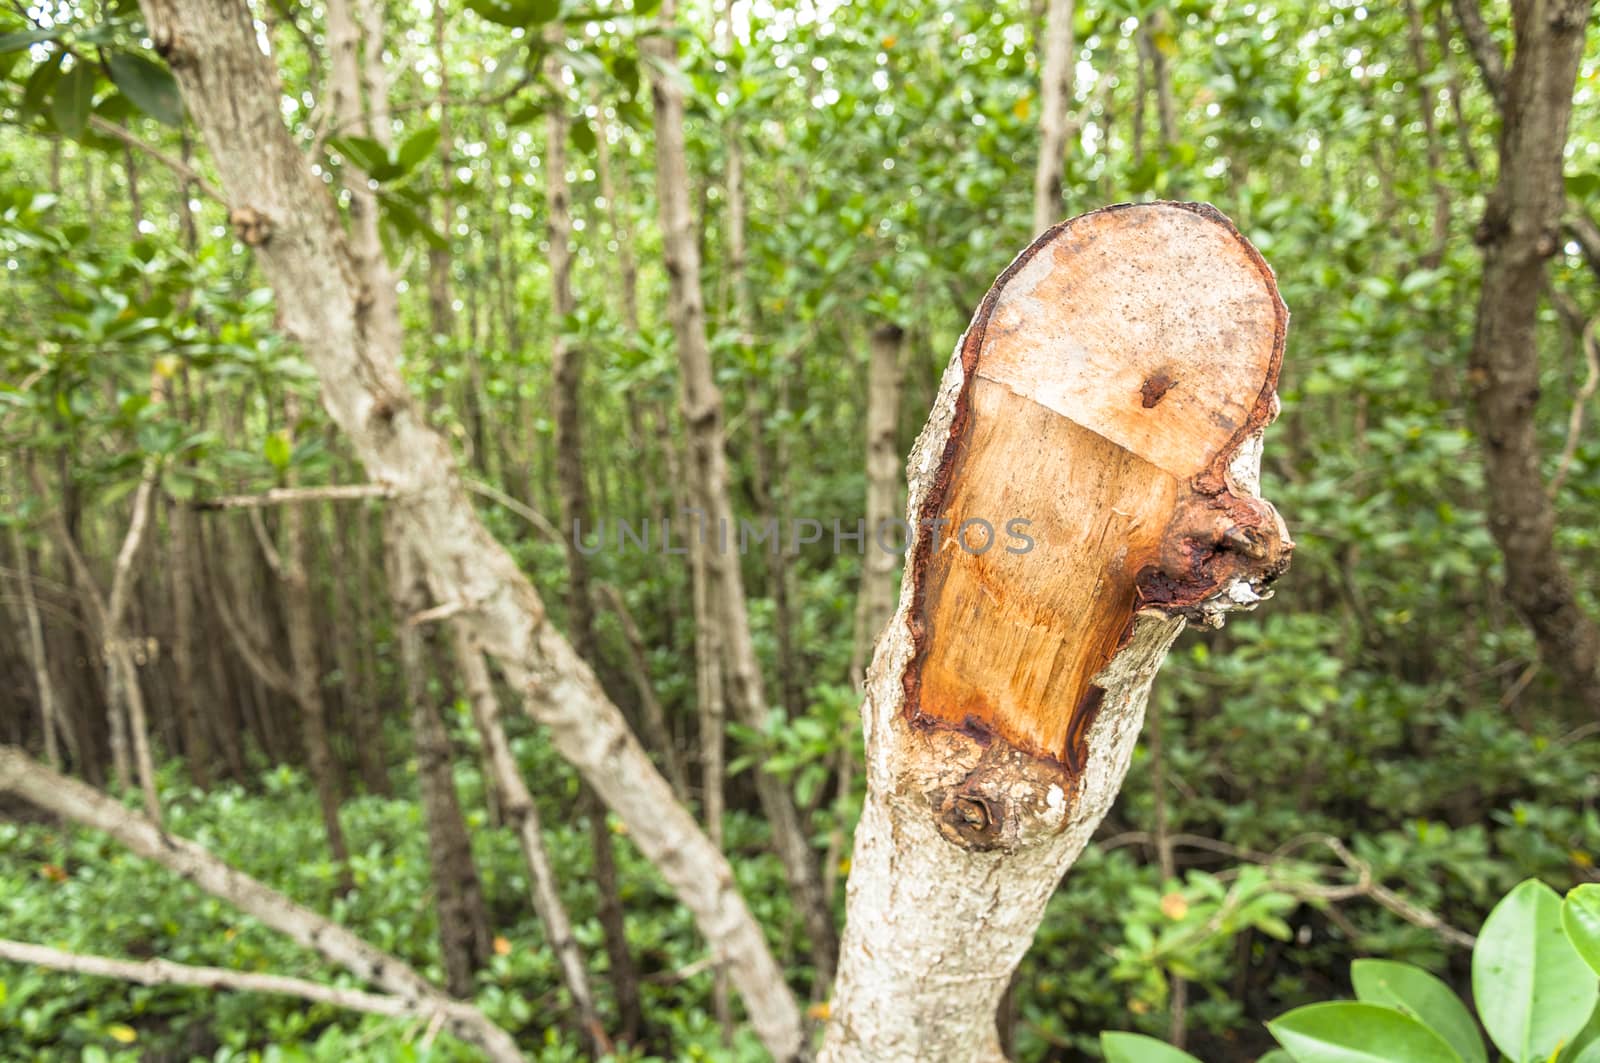 Risks associated loss of mangrove trees were cut.